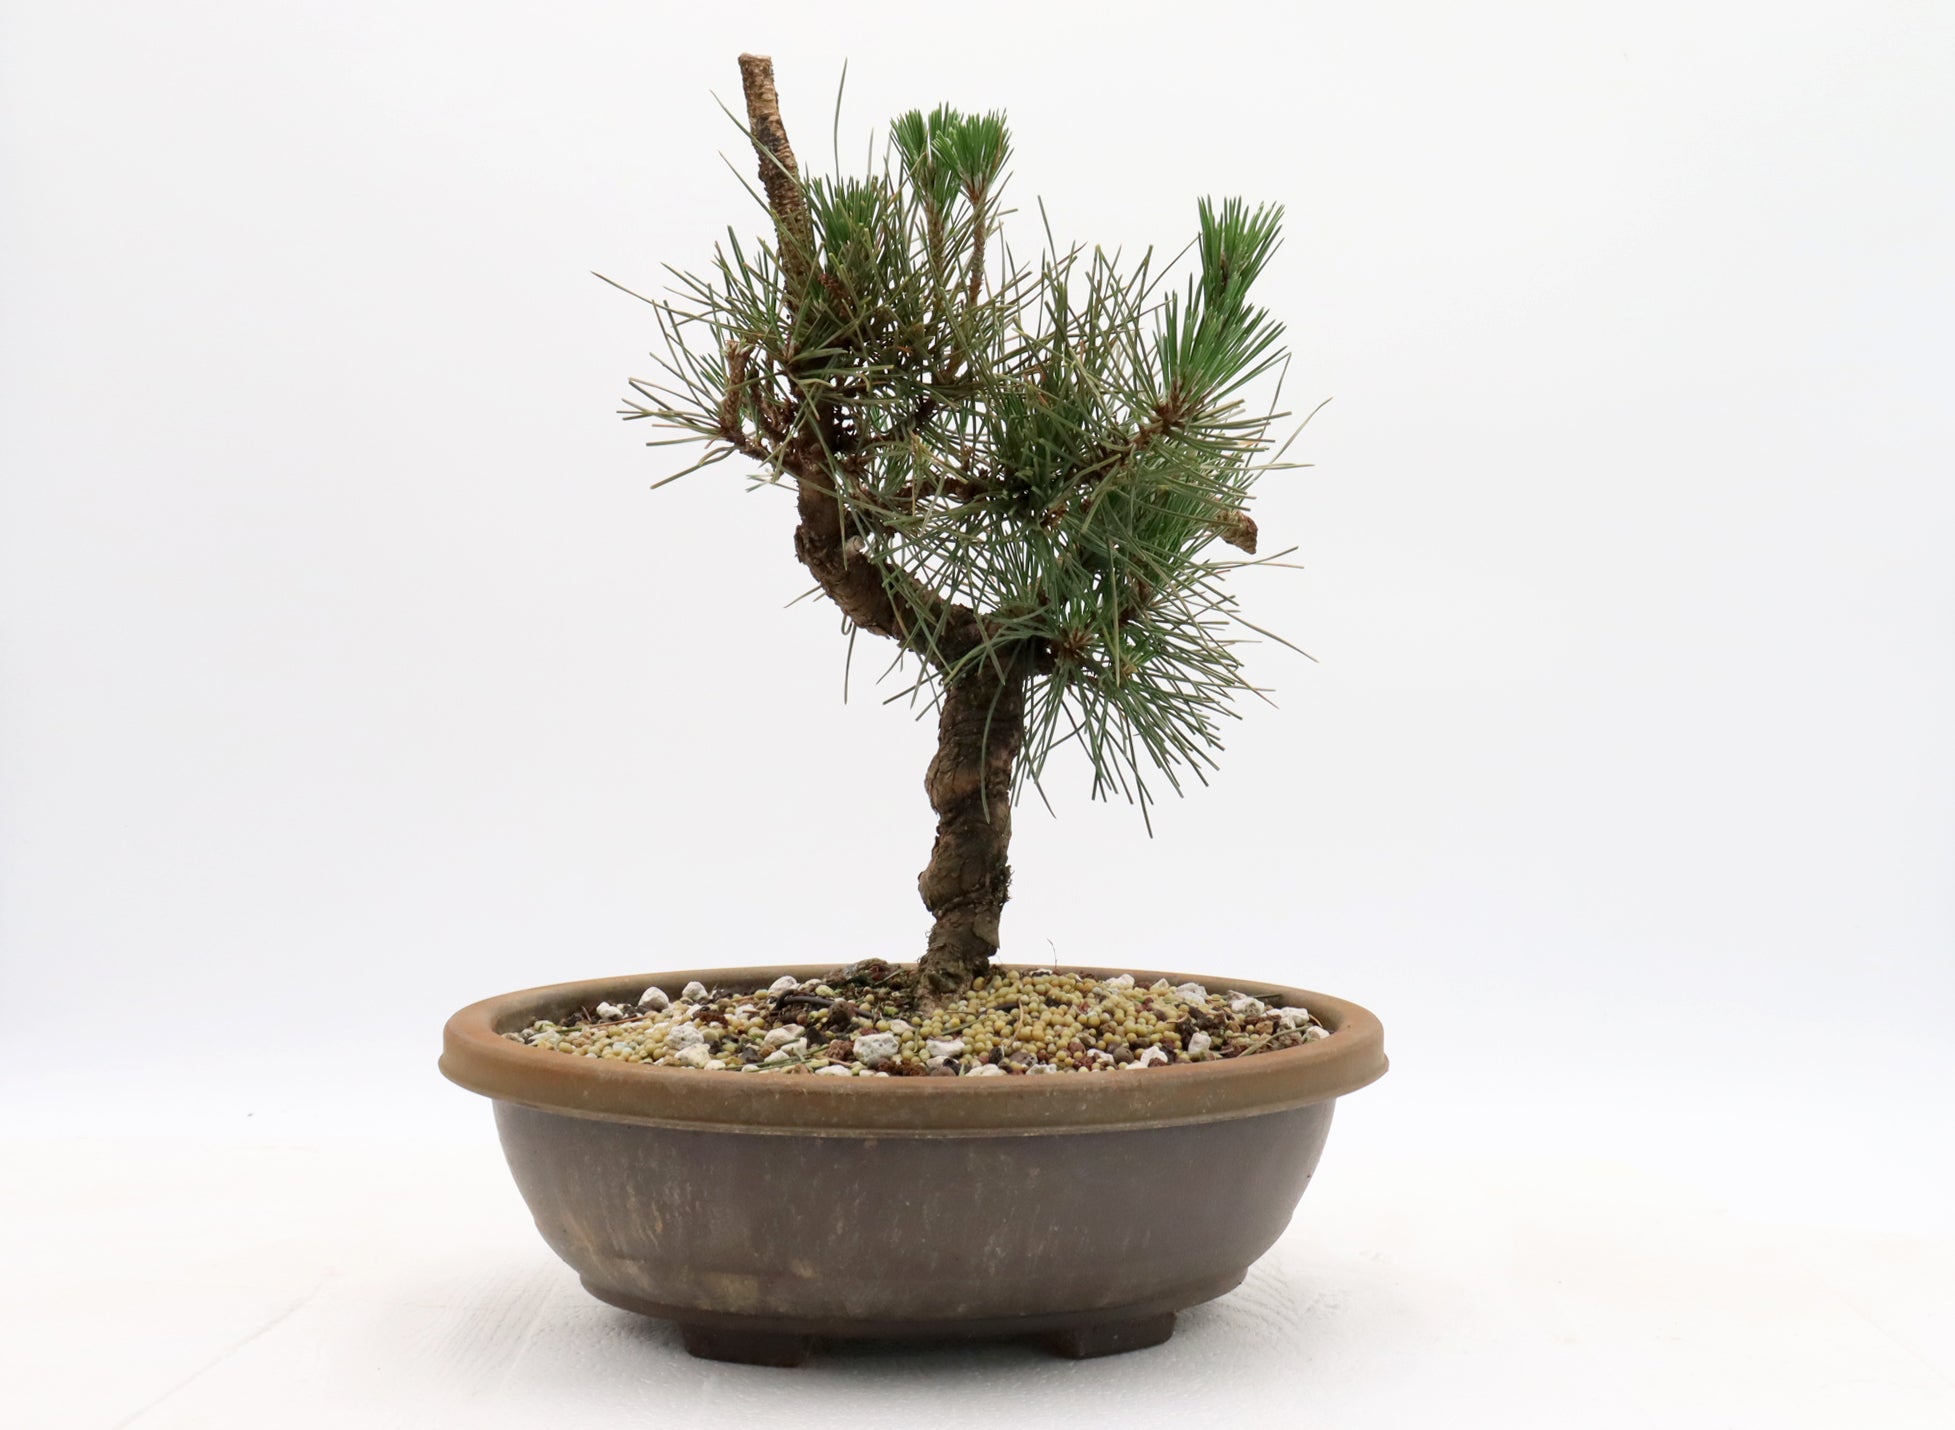 Japanese Black Pine Pre-Bonsai in a 12 Inch Plastic Trainer